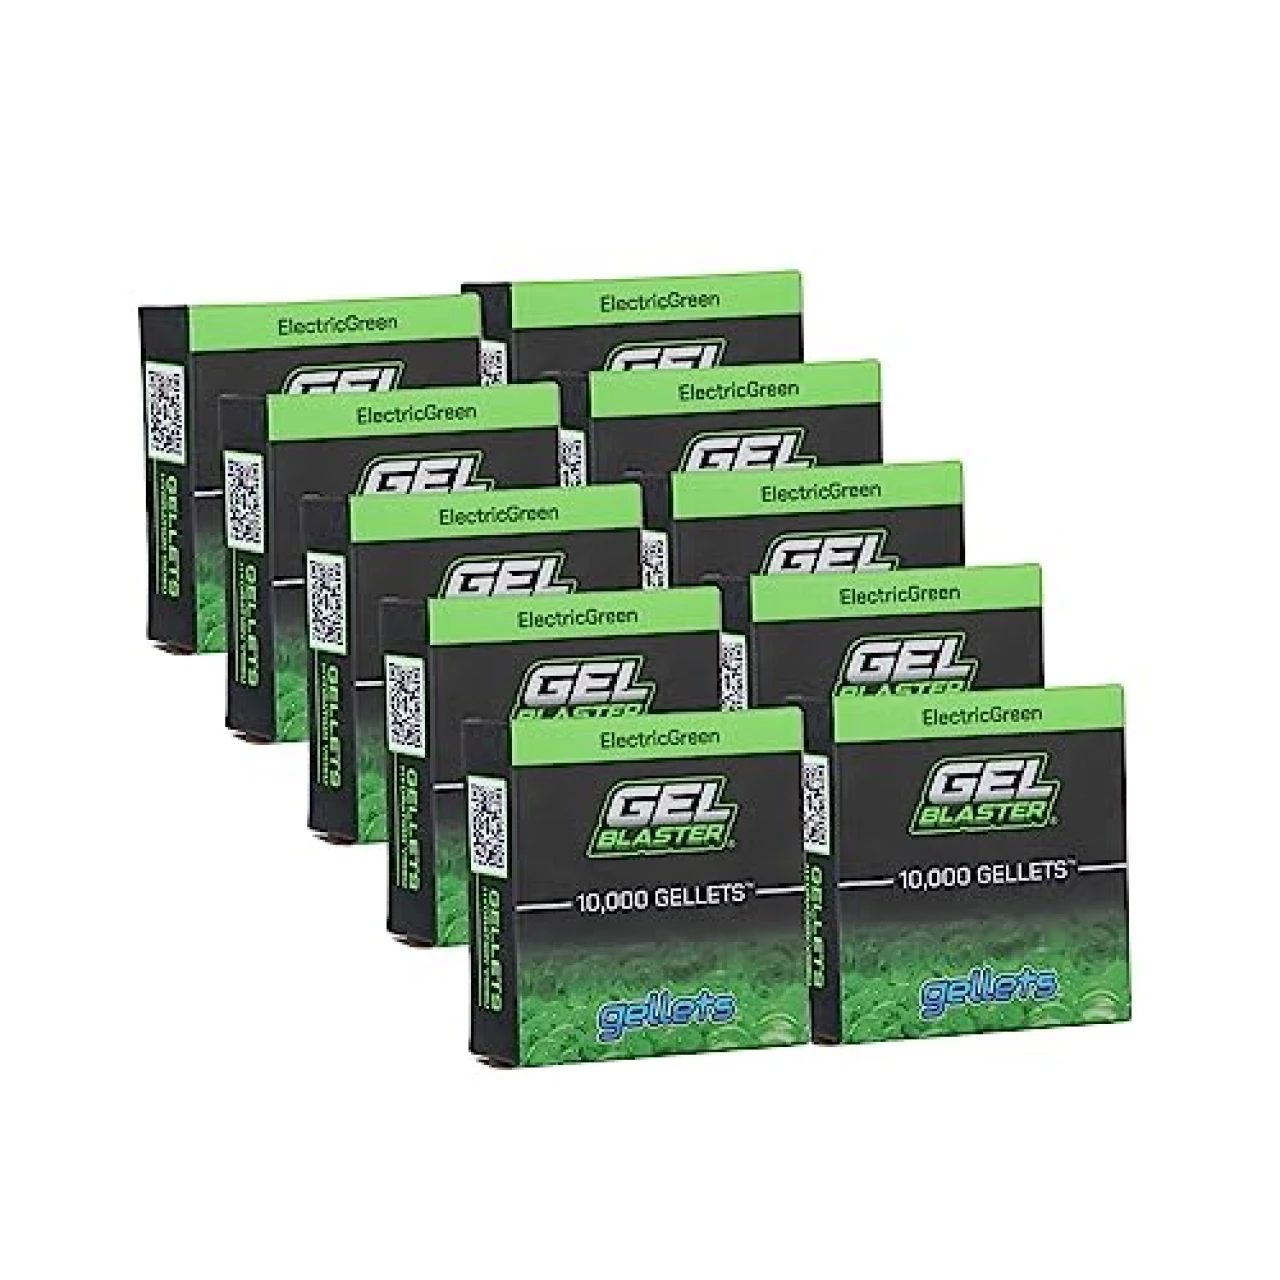 Gel Blaster Gellets - Refill Ammo for Gel Blasters